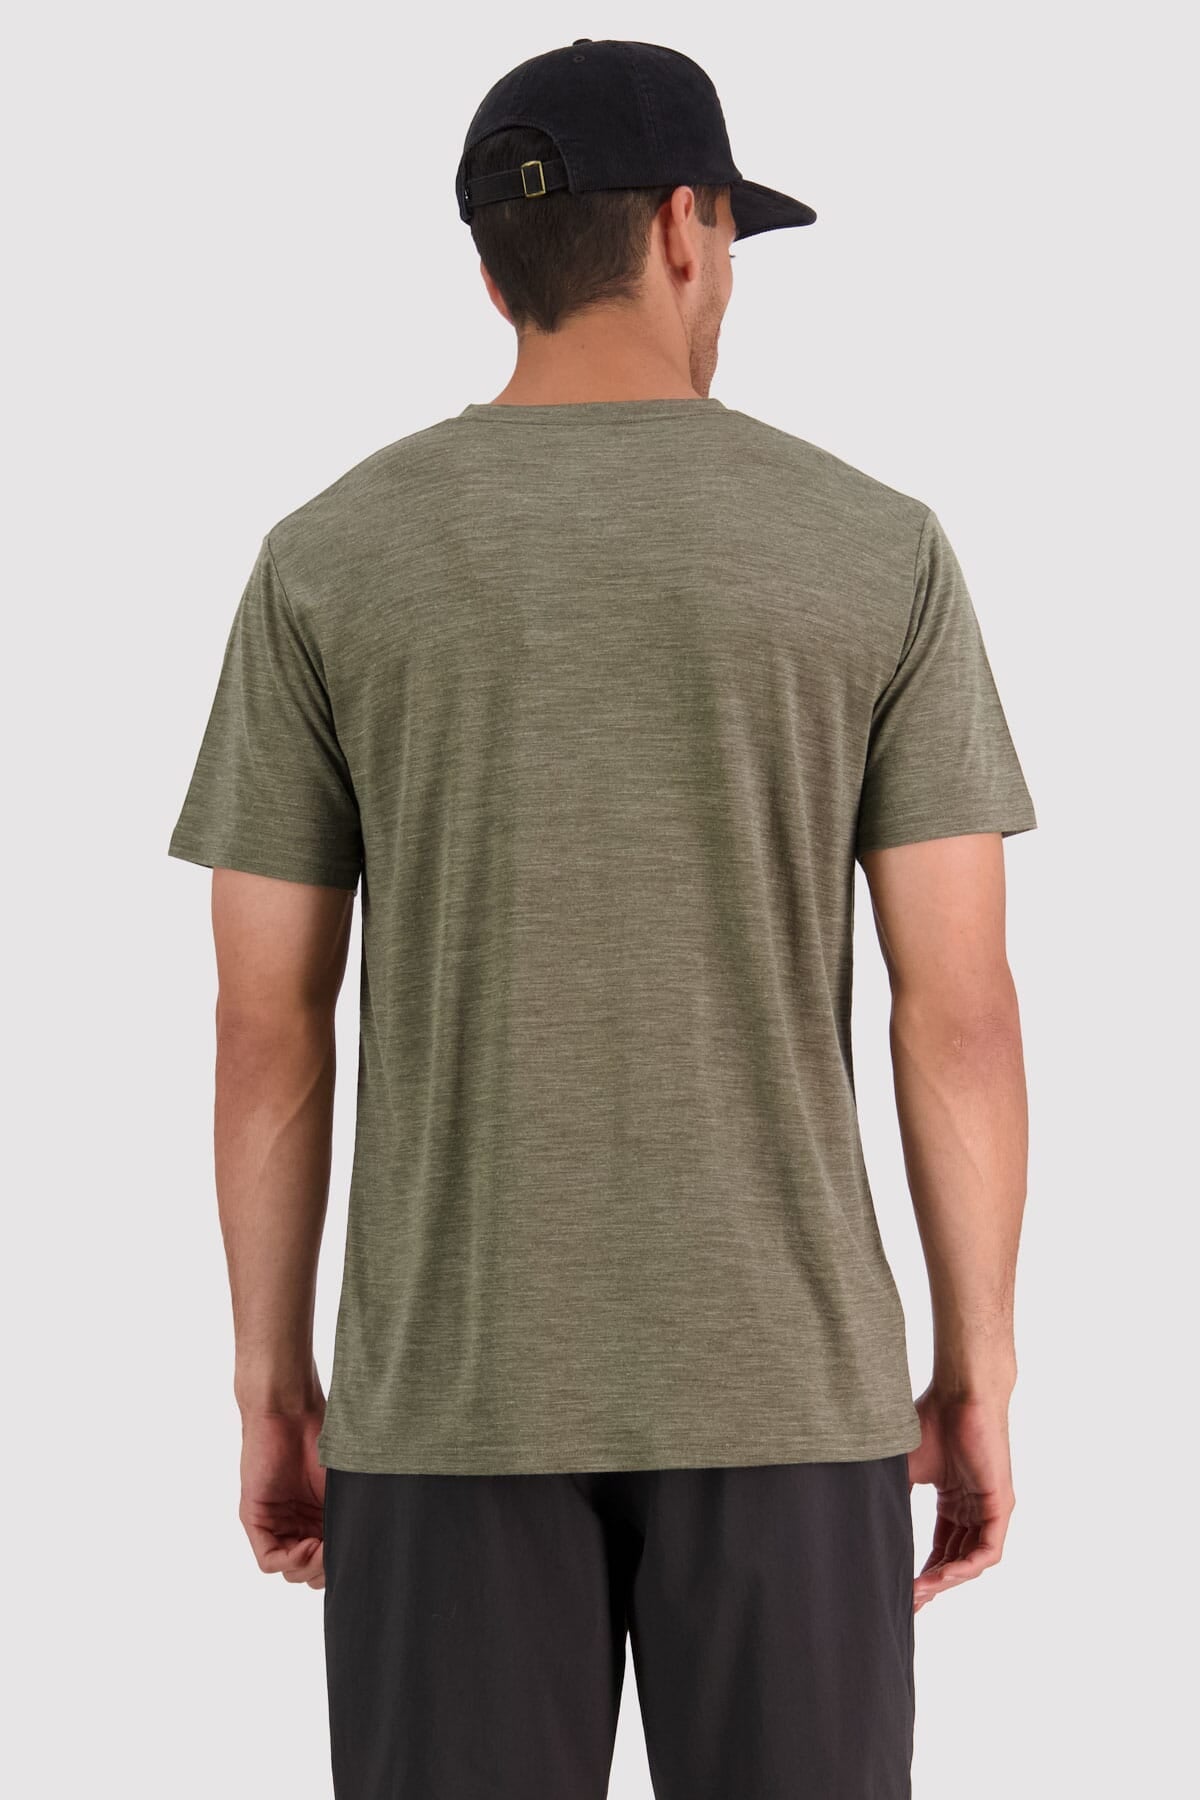 Zephyr Merino Cool T-Shirt - Olive Mt Hand